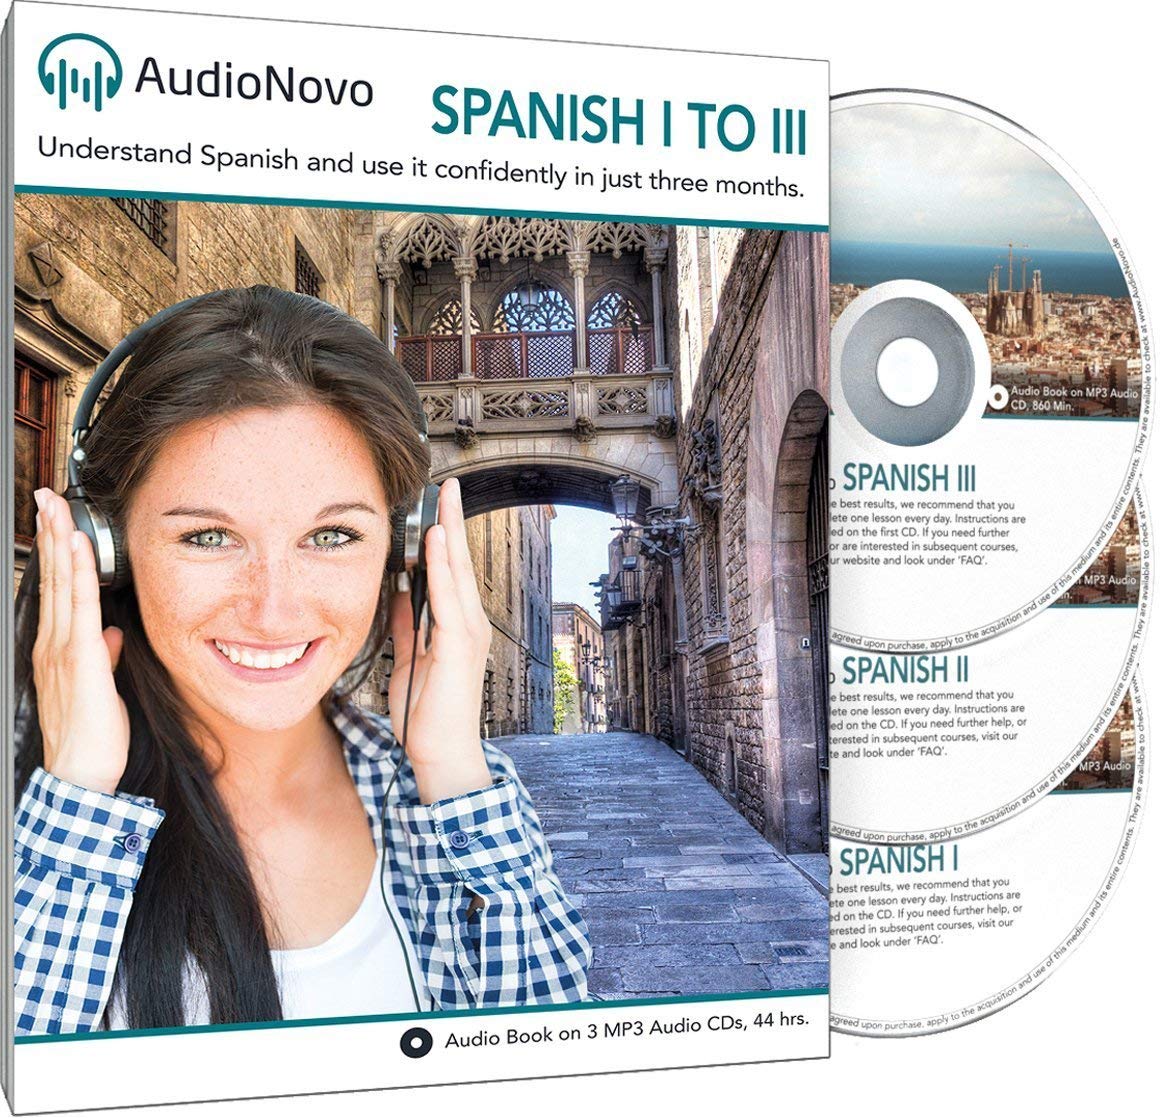 audionovo spanish, audionovo spanish review